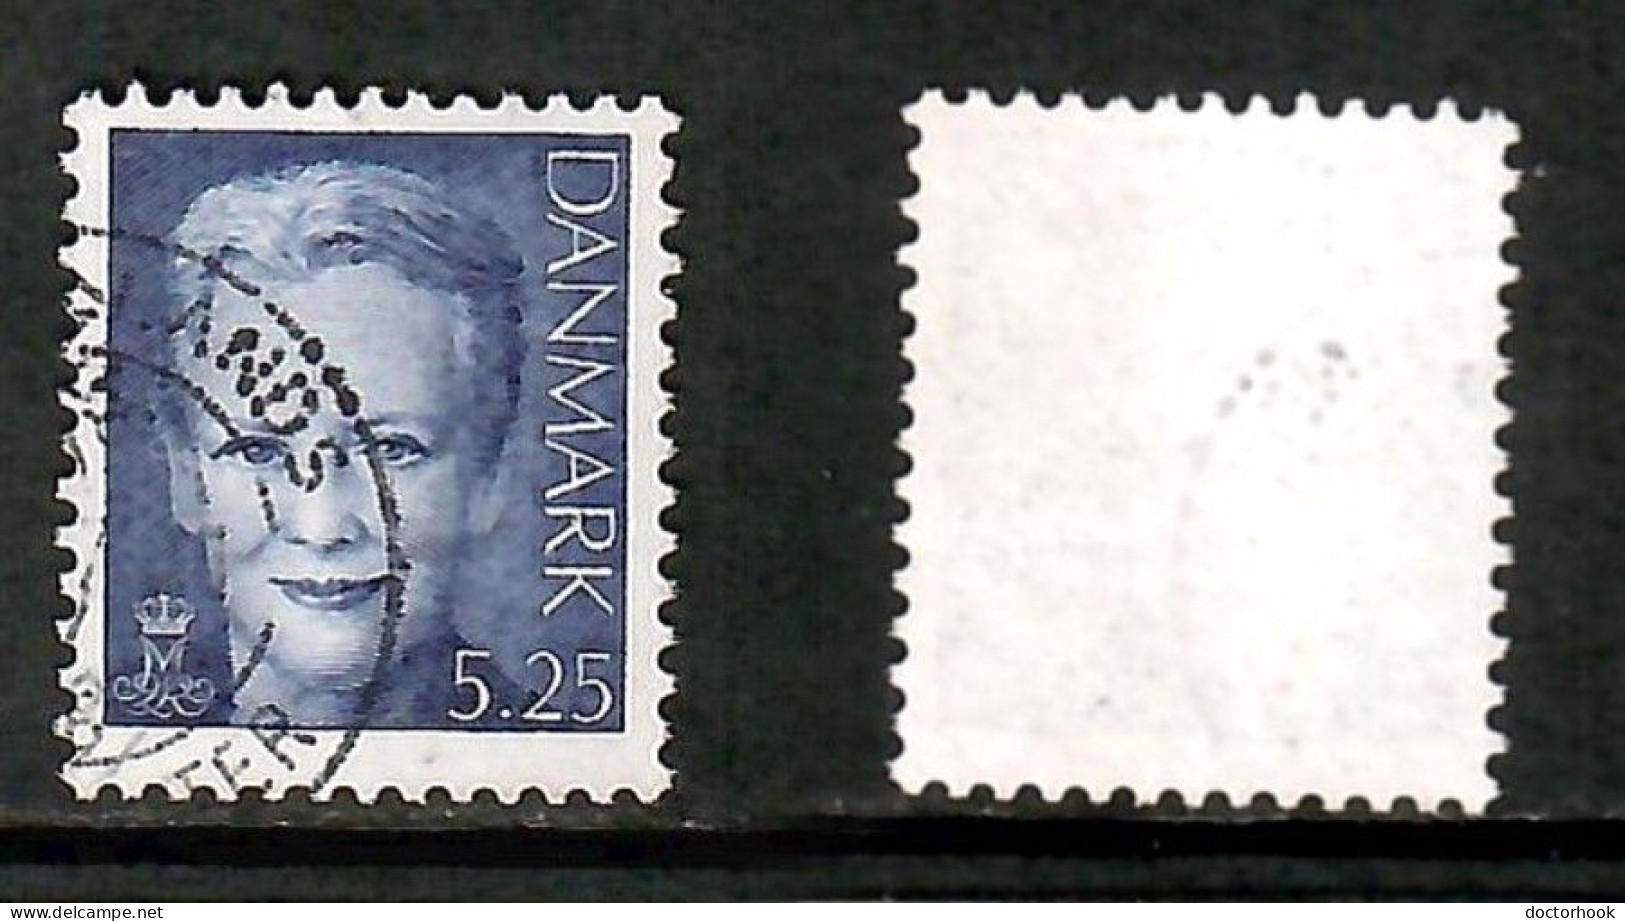 DENMARK   Scott # 1123 USED (CONDITION PER SCAN) (Stamp Scan # 1024-8) - Oblitérés